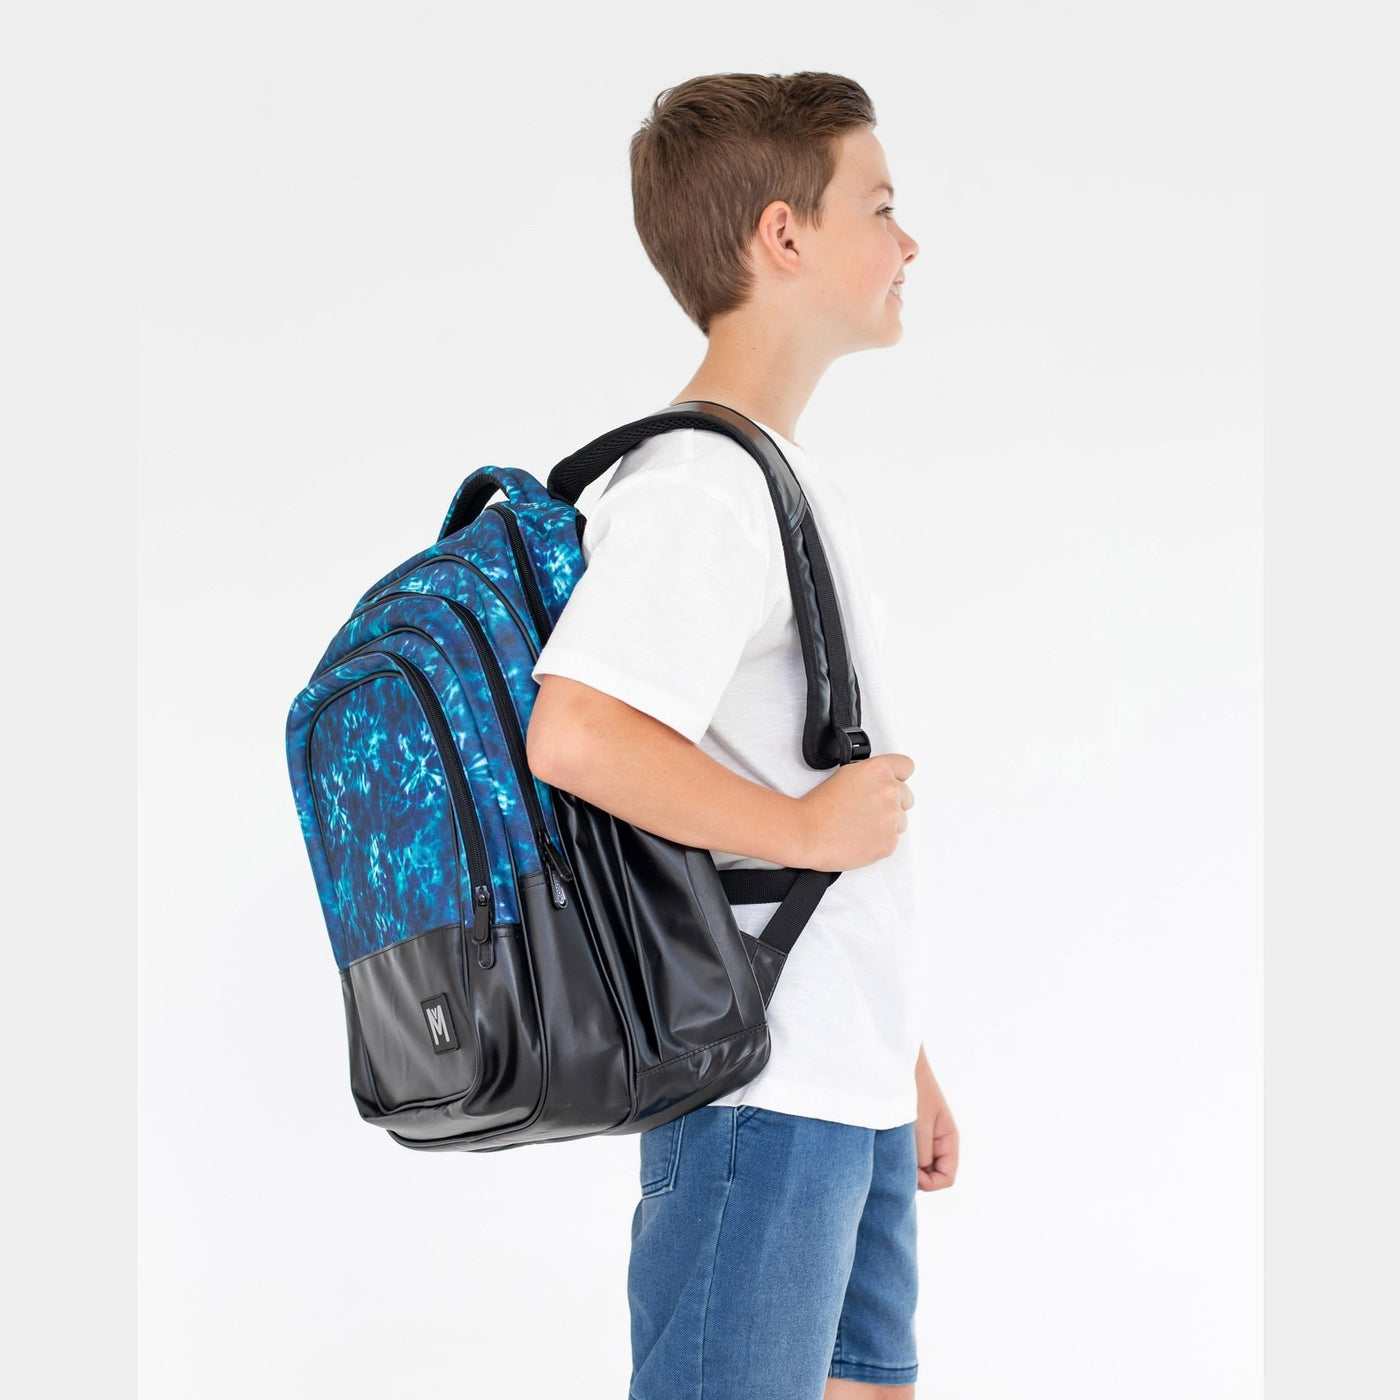 Backpack Nova